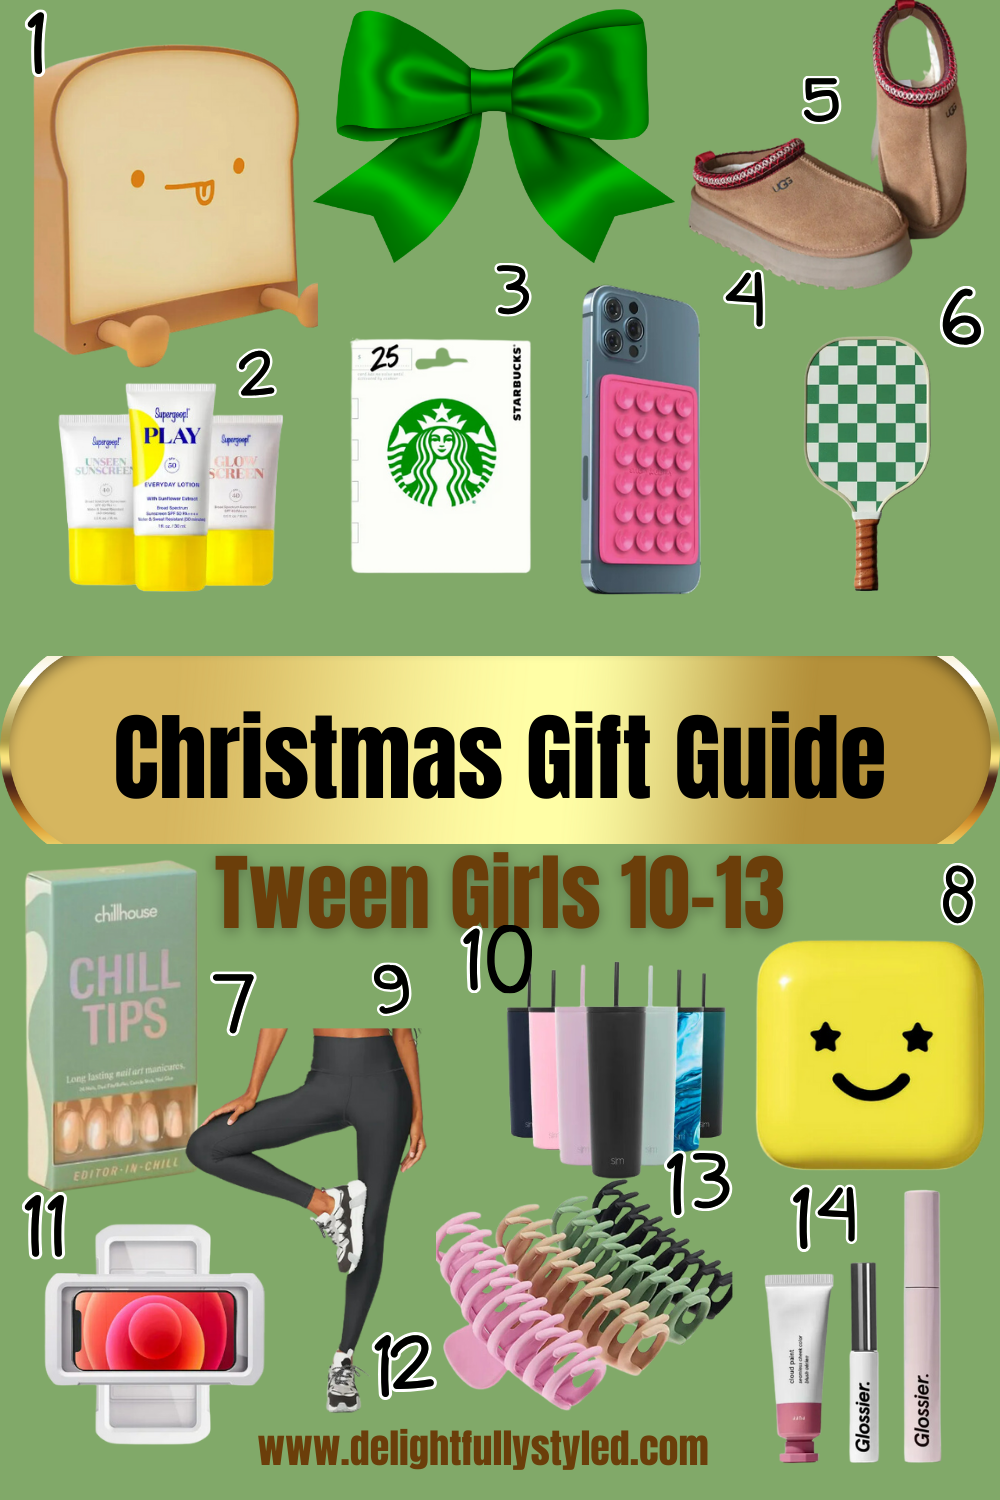 10 Christmas Gift Ideas for Tween Girls